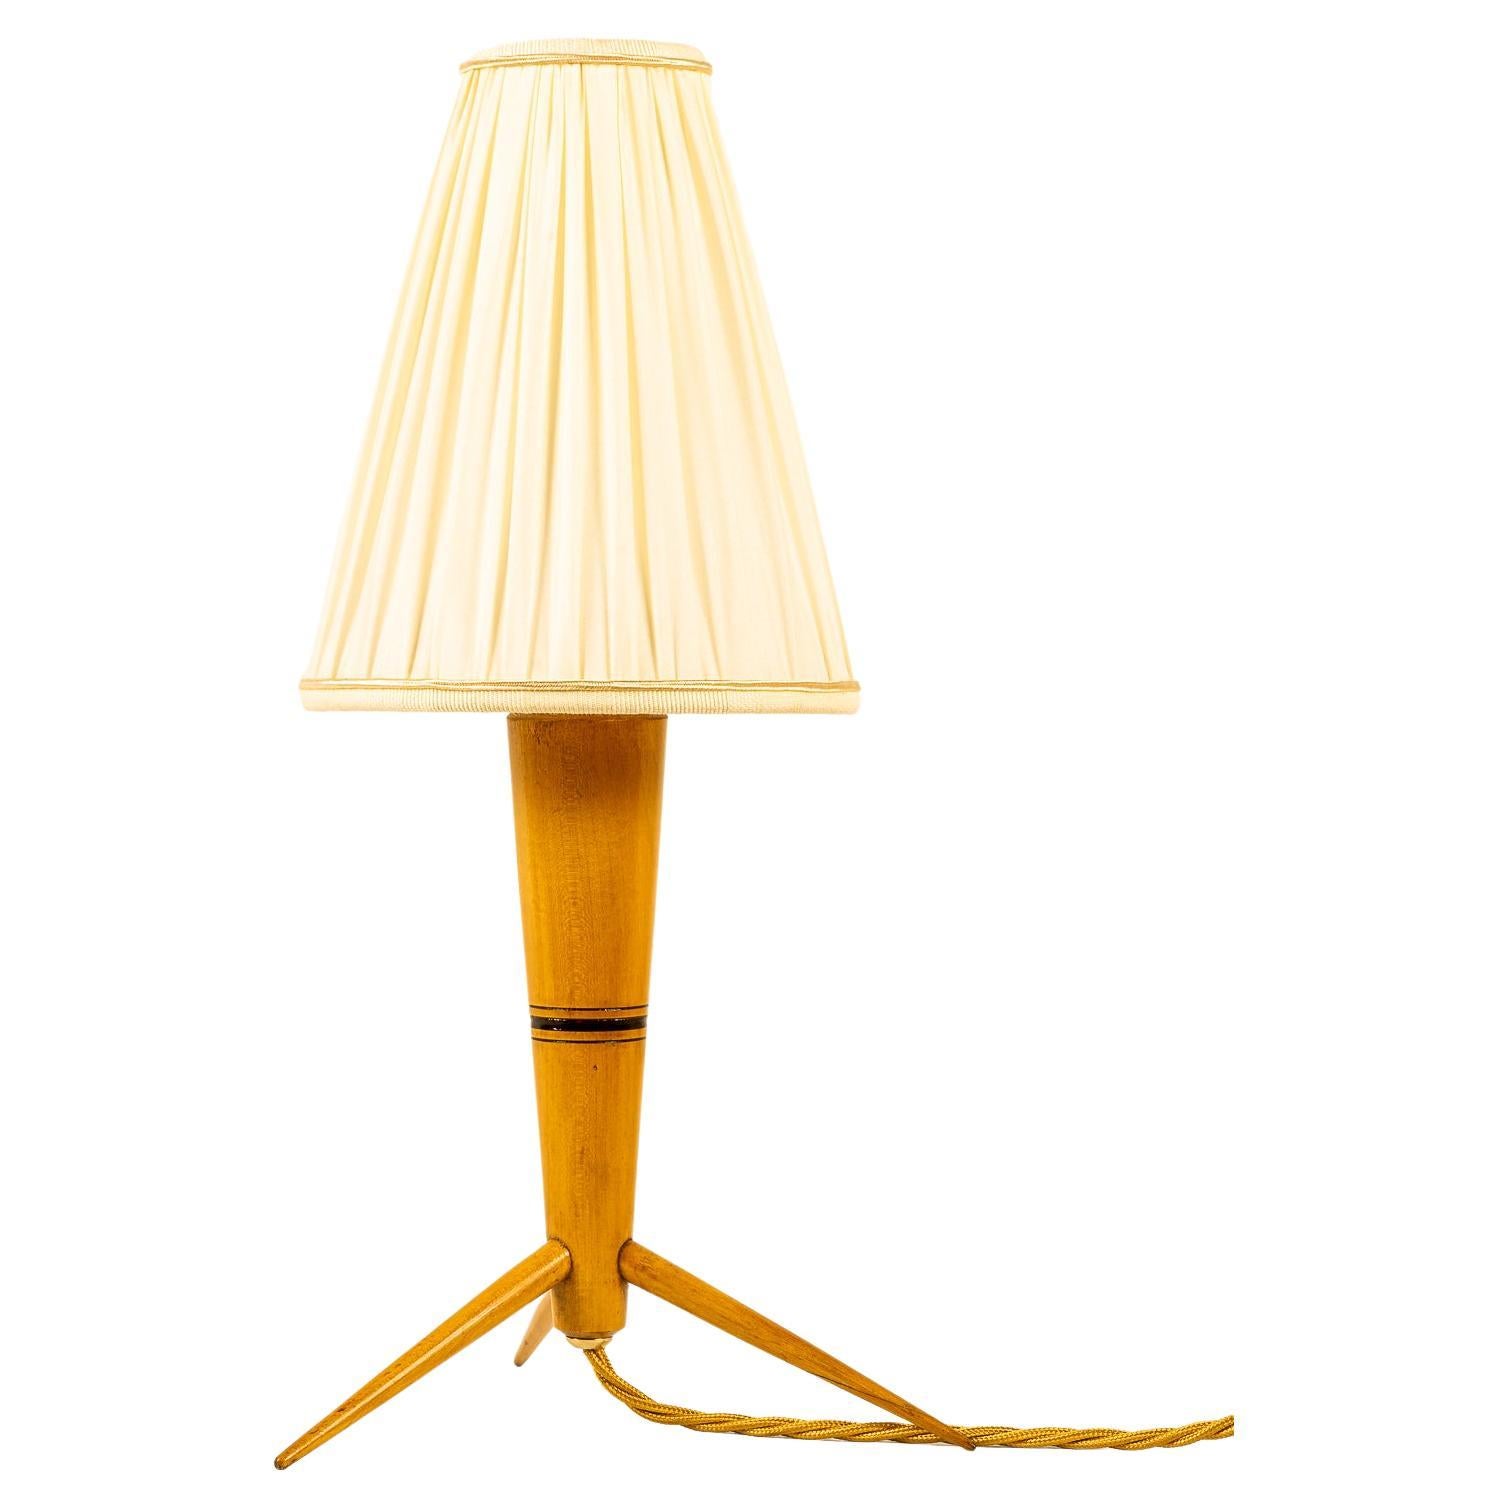 Lampe de table en Wood avec abat-jour en tissu vers 1950